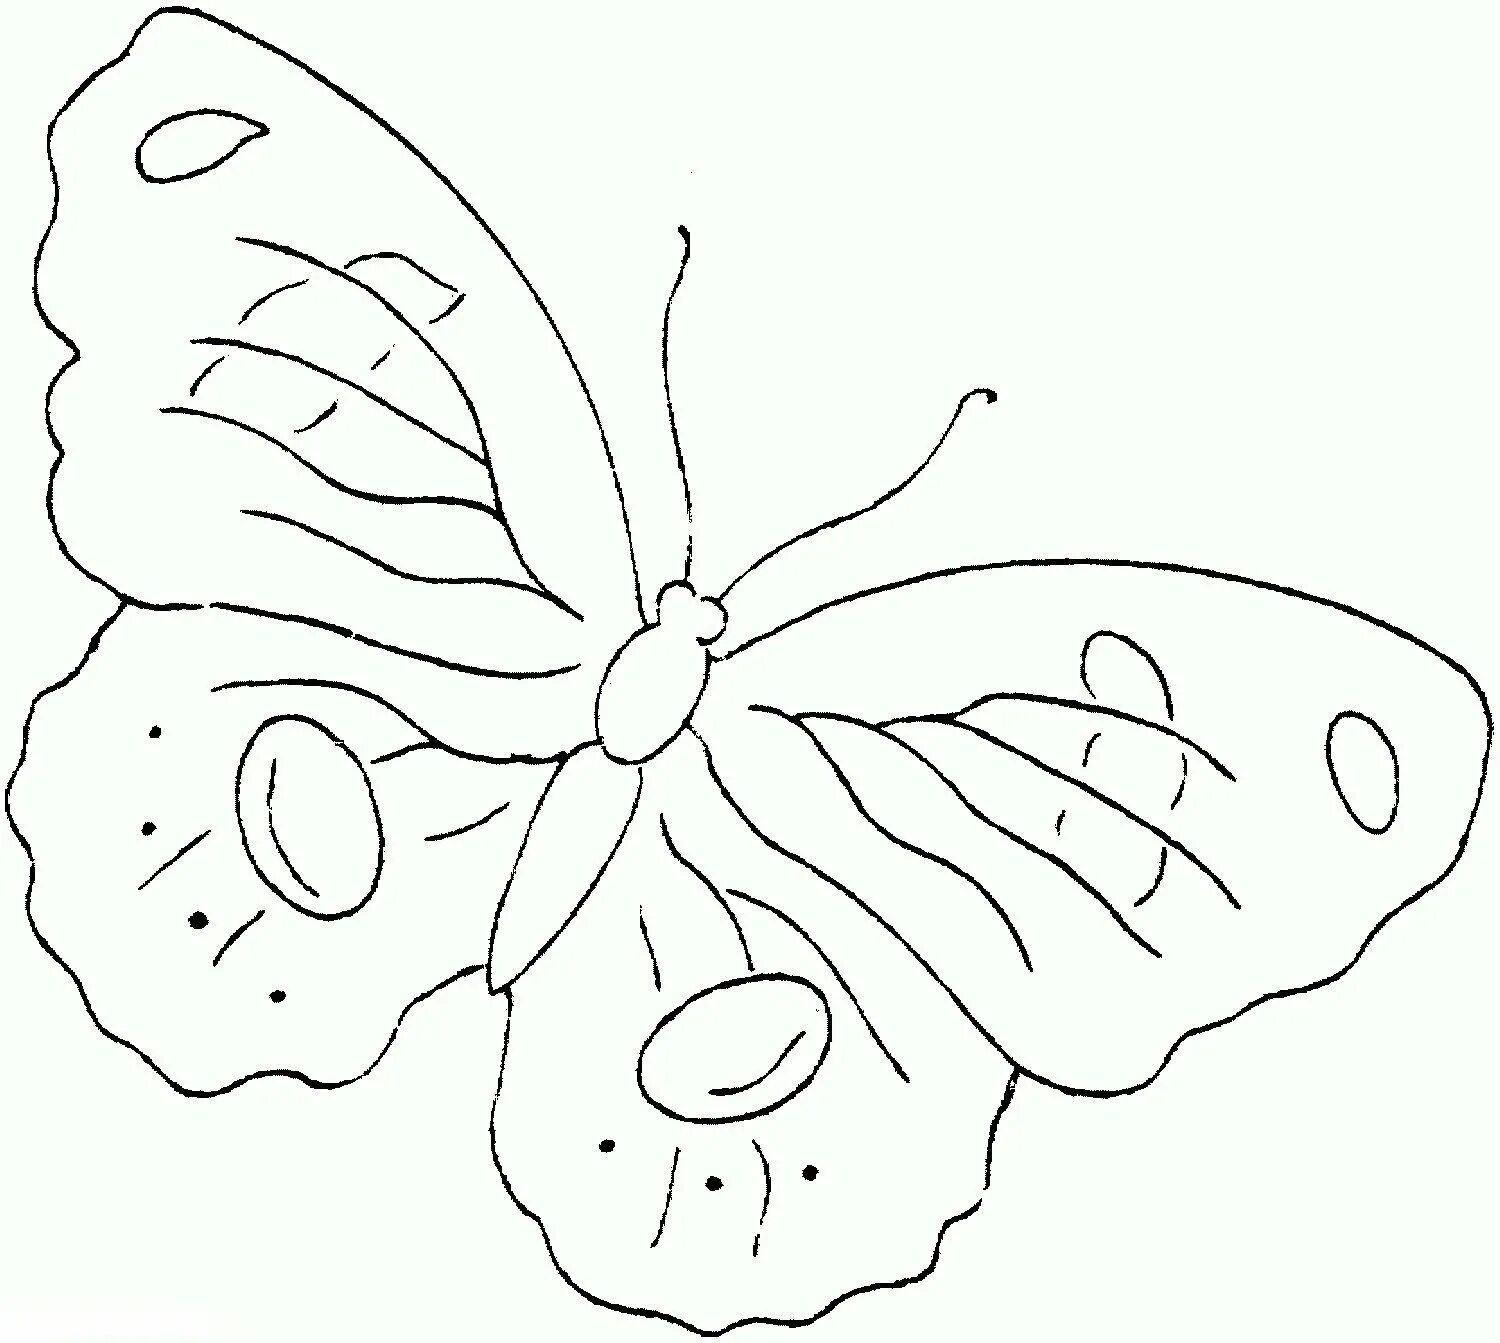 Бабочка раскраска для детей. Бабочка раскраска для малышей. Трафарет бабочки для рисования. Бабочка трафарет для раскрашивания. Бабочка лимонница рисунок